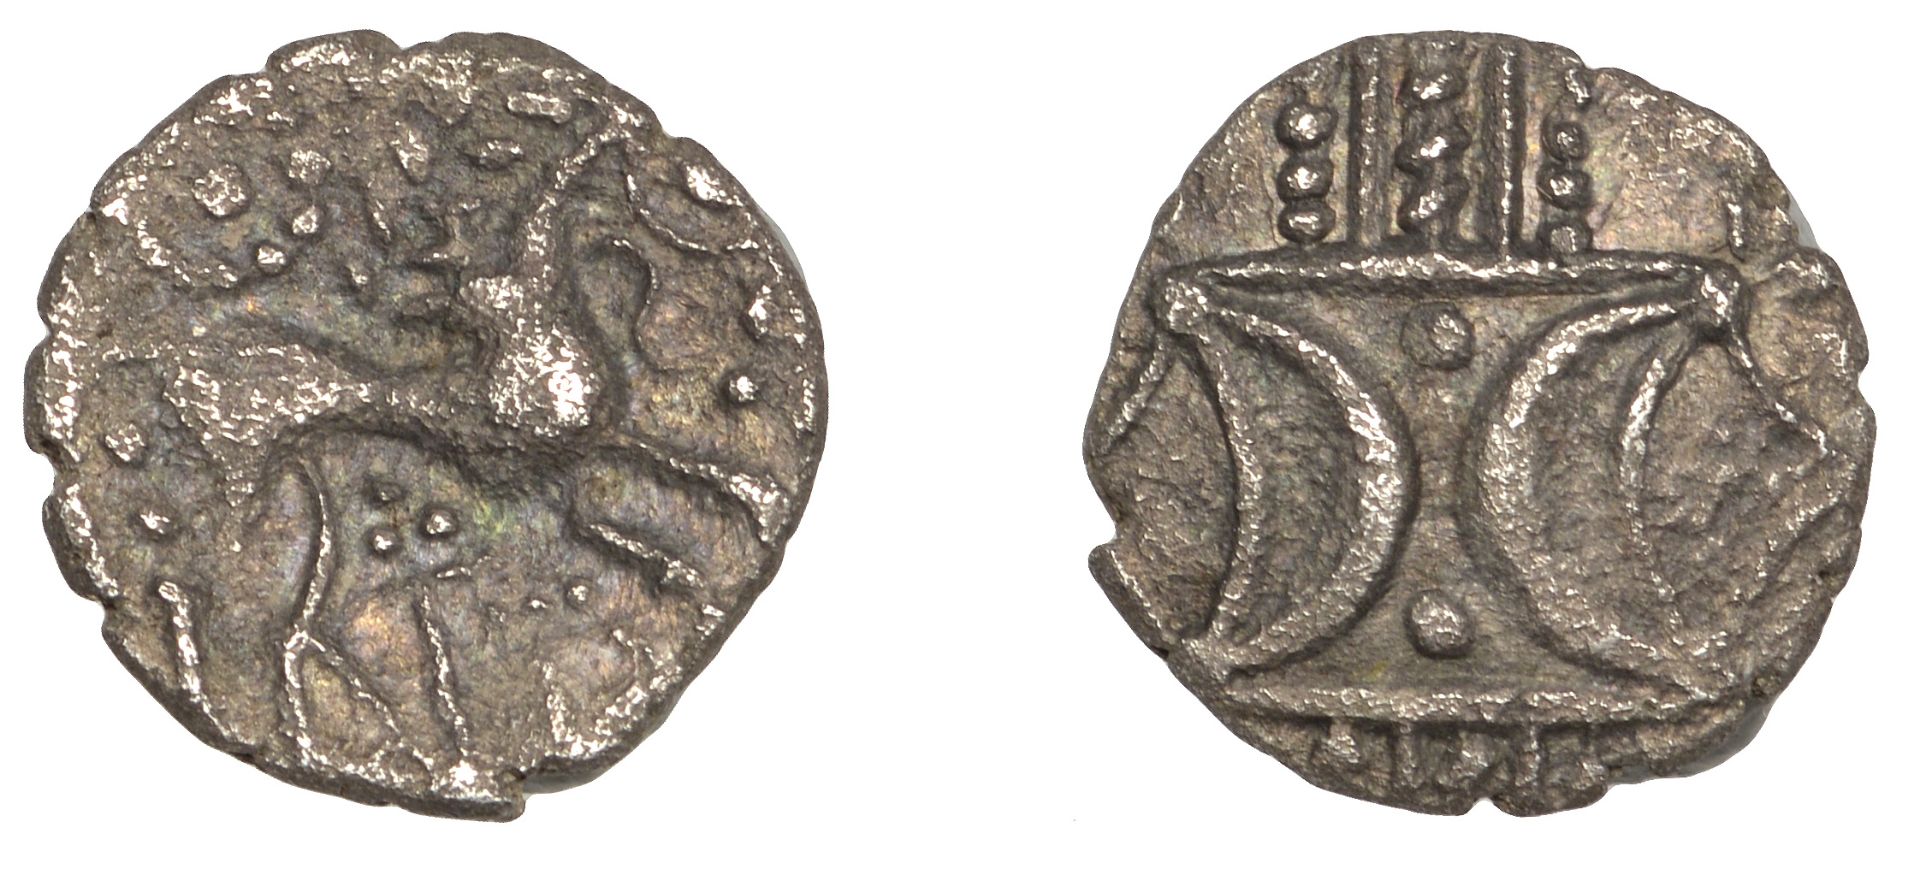 British Iron Age, ICENI, Antedios, silver Unit, double crescent emblem on vertical wreath, r...